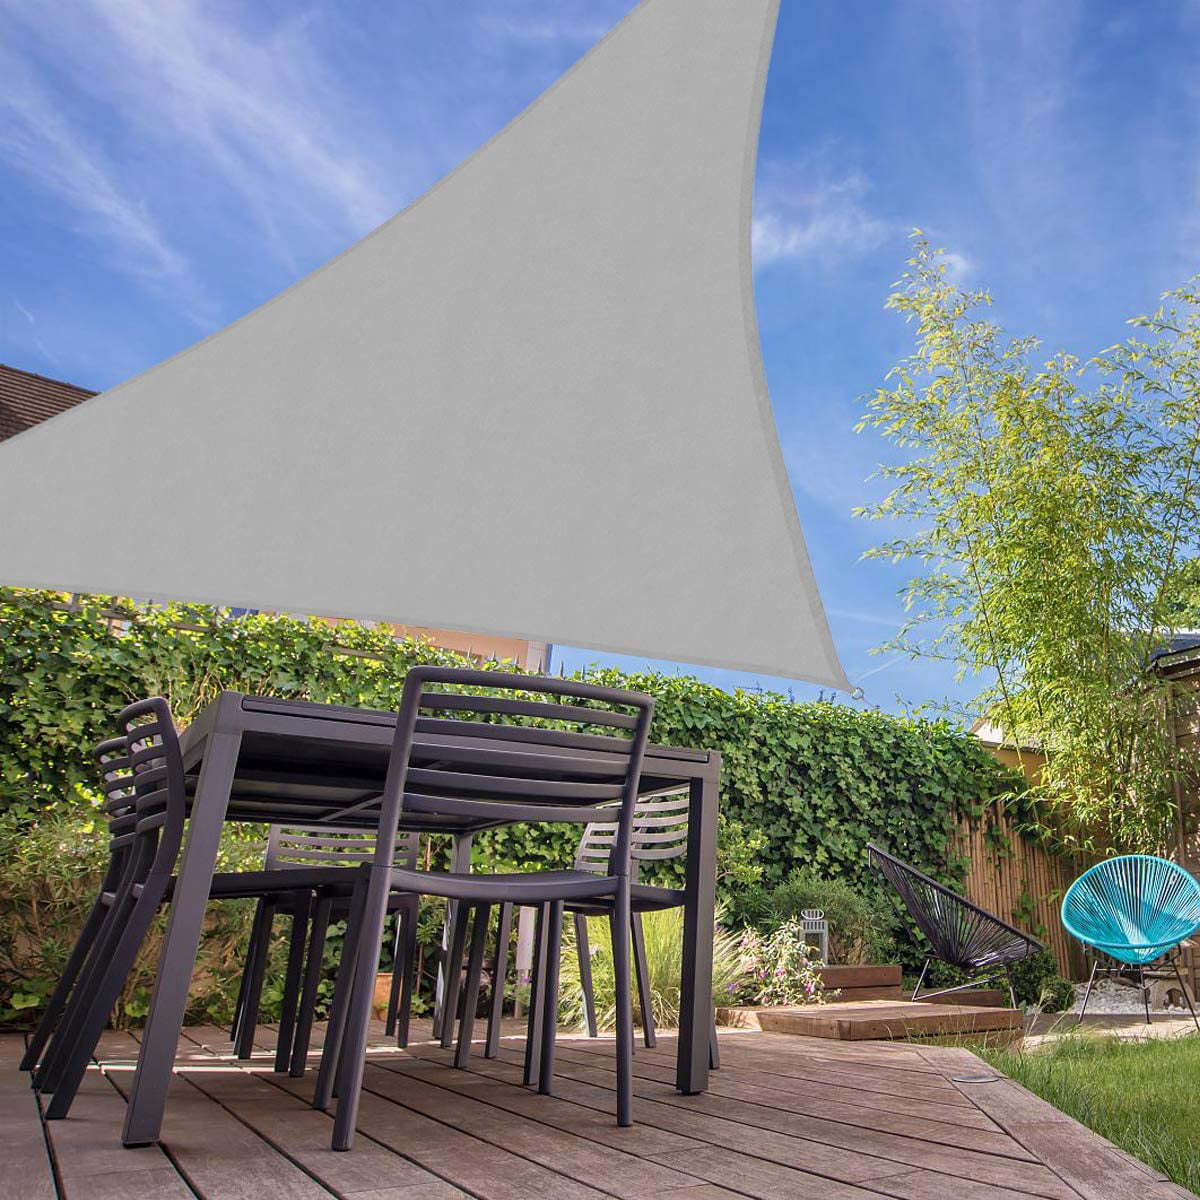 Details about   Sun Shade Sail Sunscreen Awning Canopy Cover Garden Patio Backyard Waterproof 